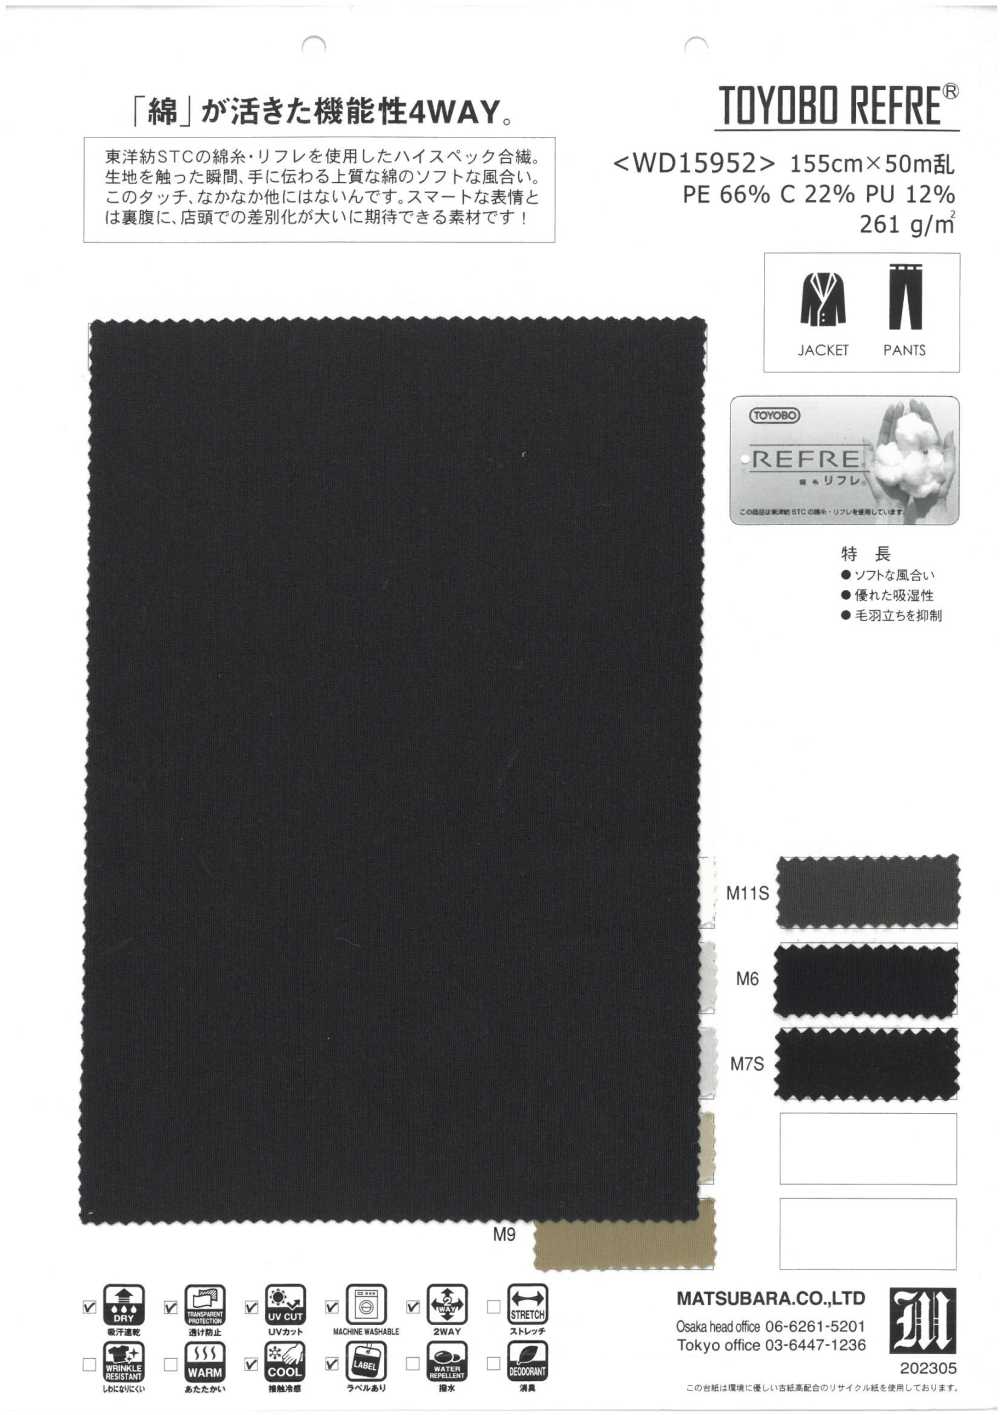 WD15952 TOYOBO REFRE®[Textilgewebe] Matsubara